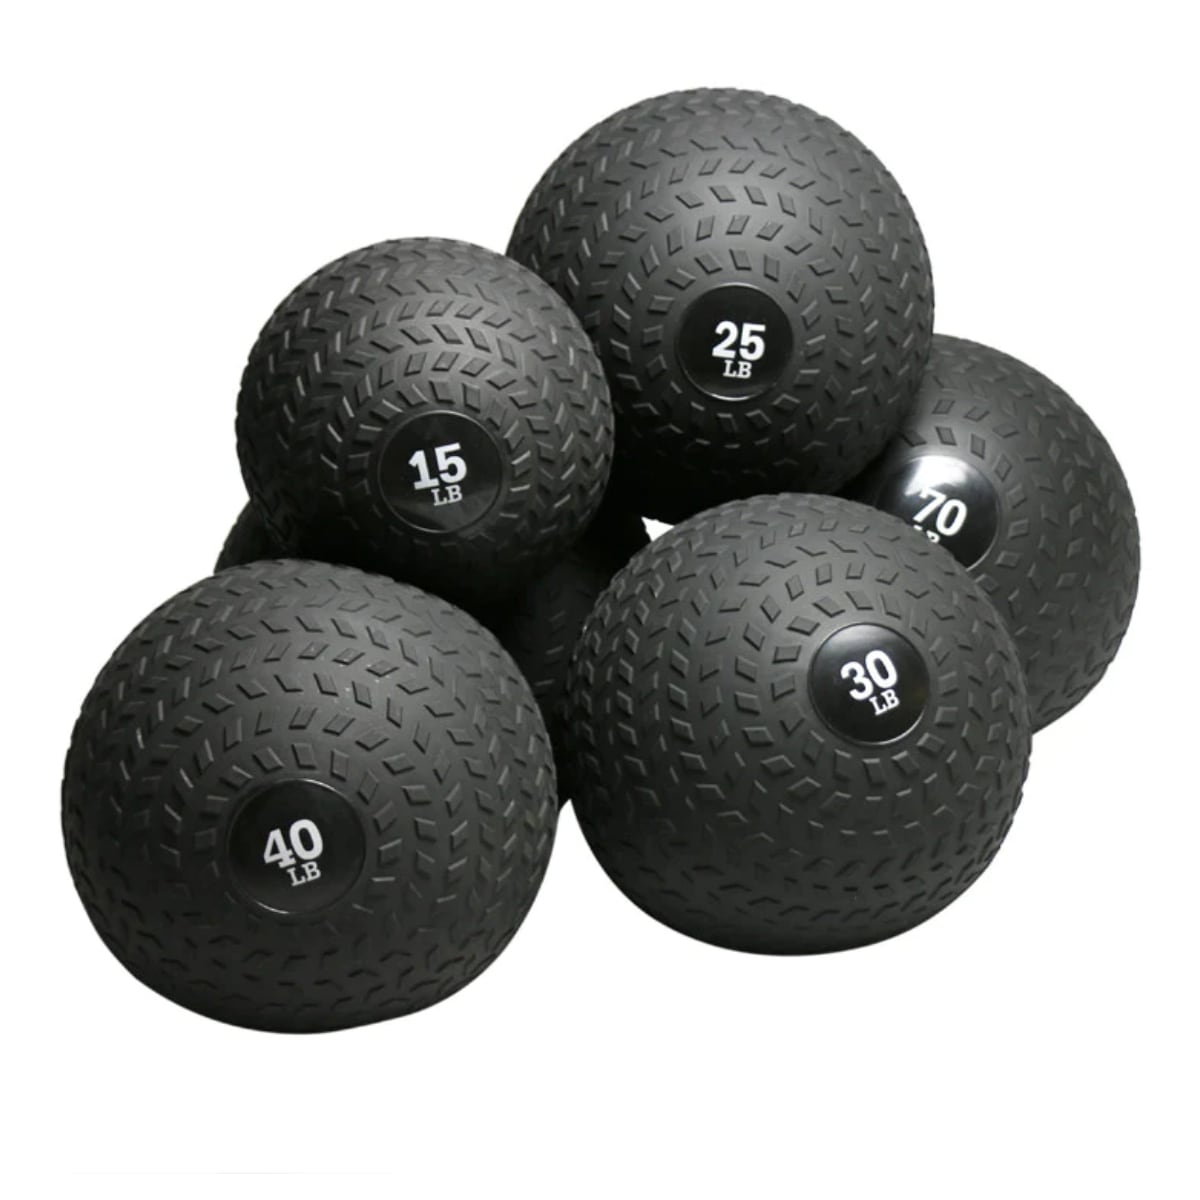 Brug American barbell AmericanBarbell Slam Ball 50 lb til en forbedret oplevelse